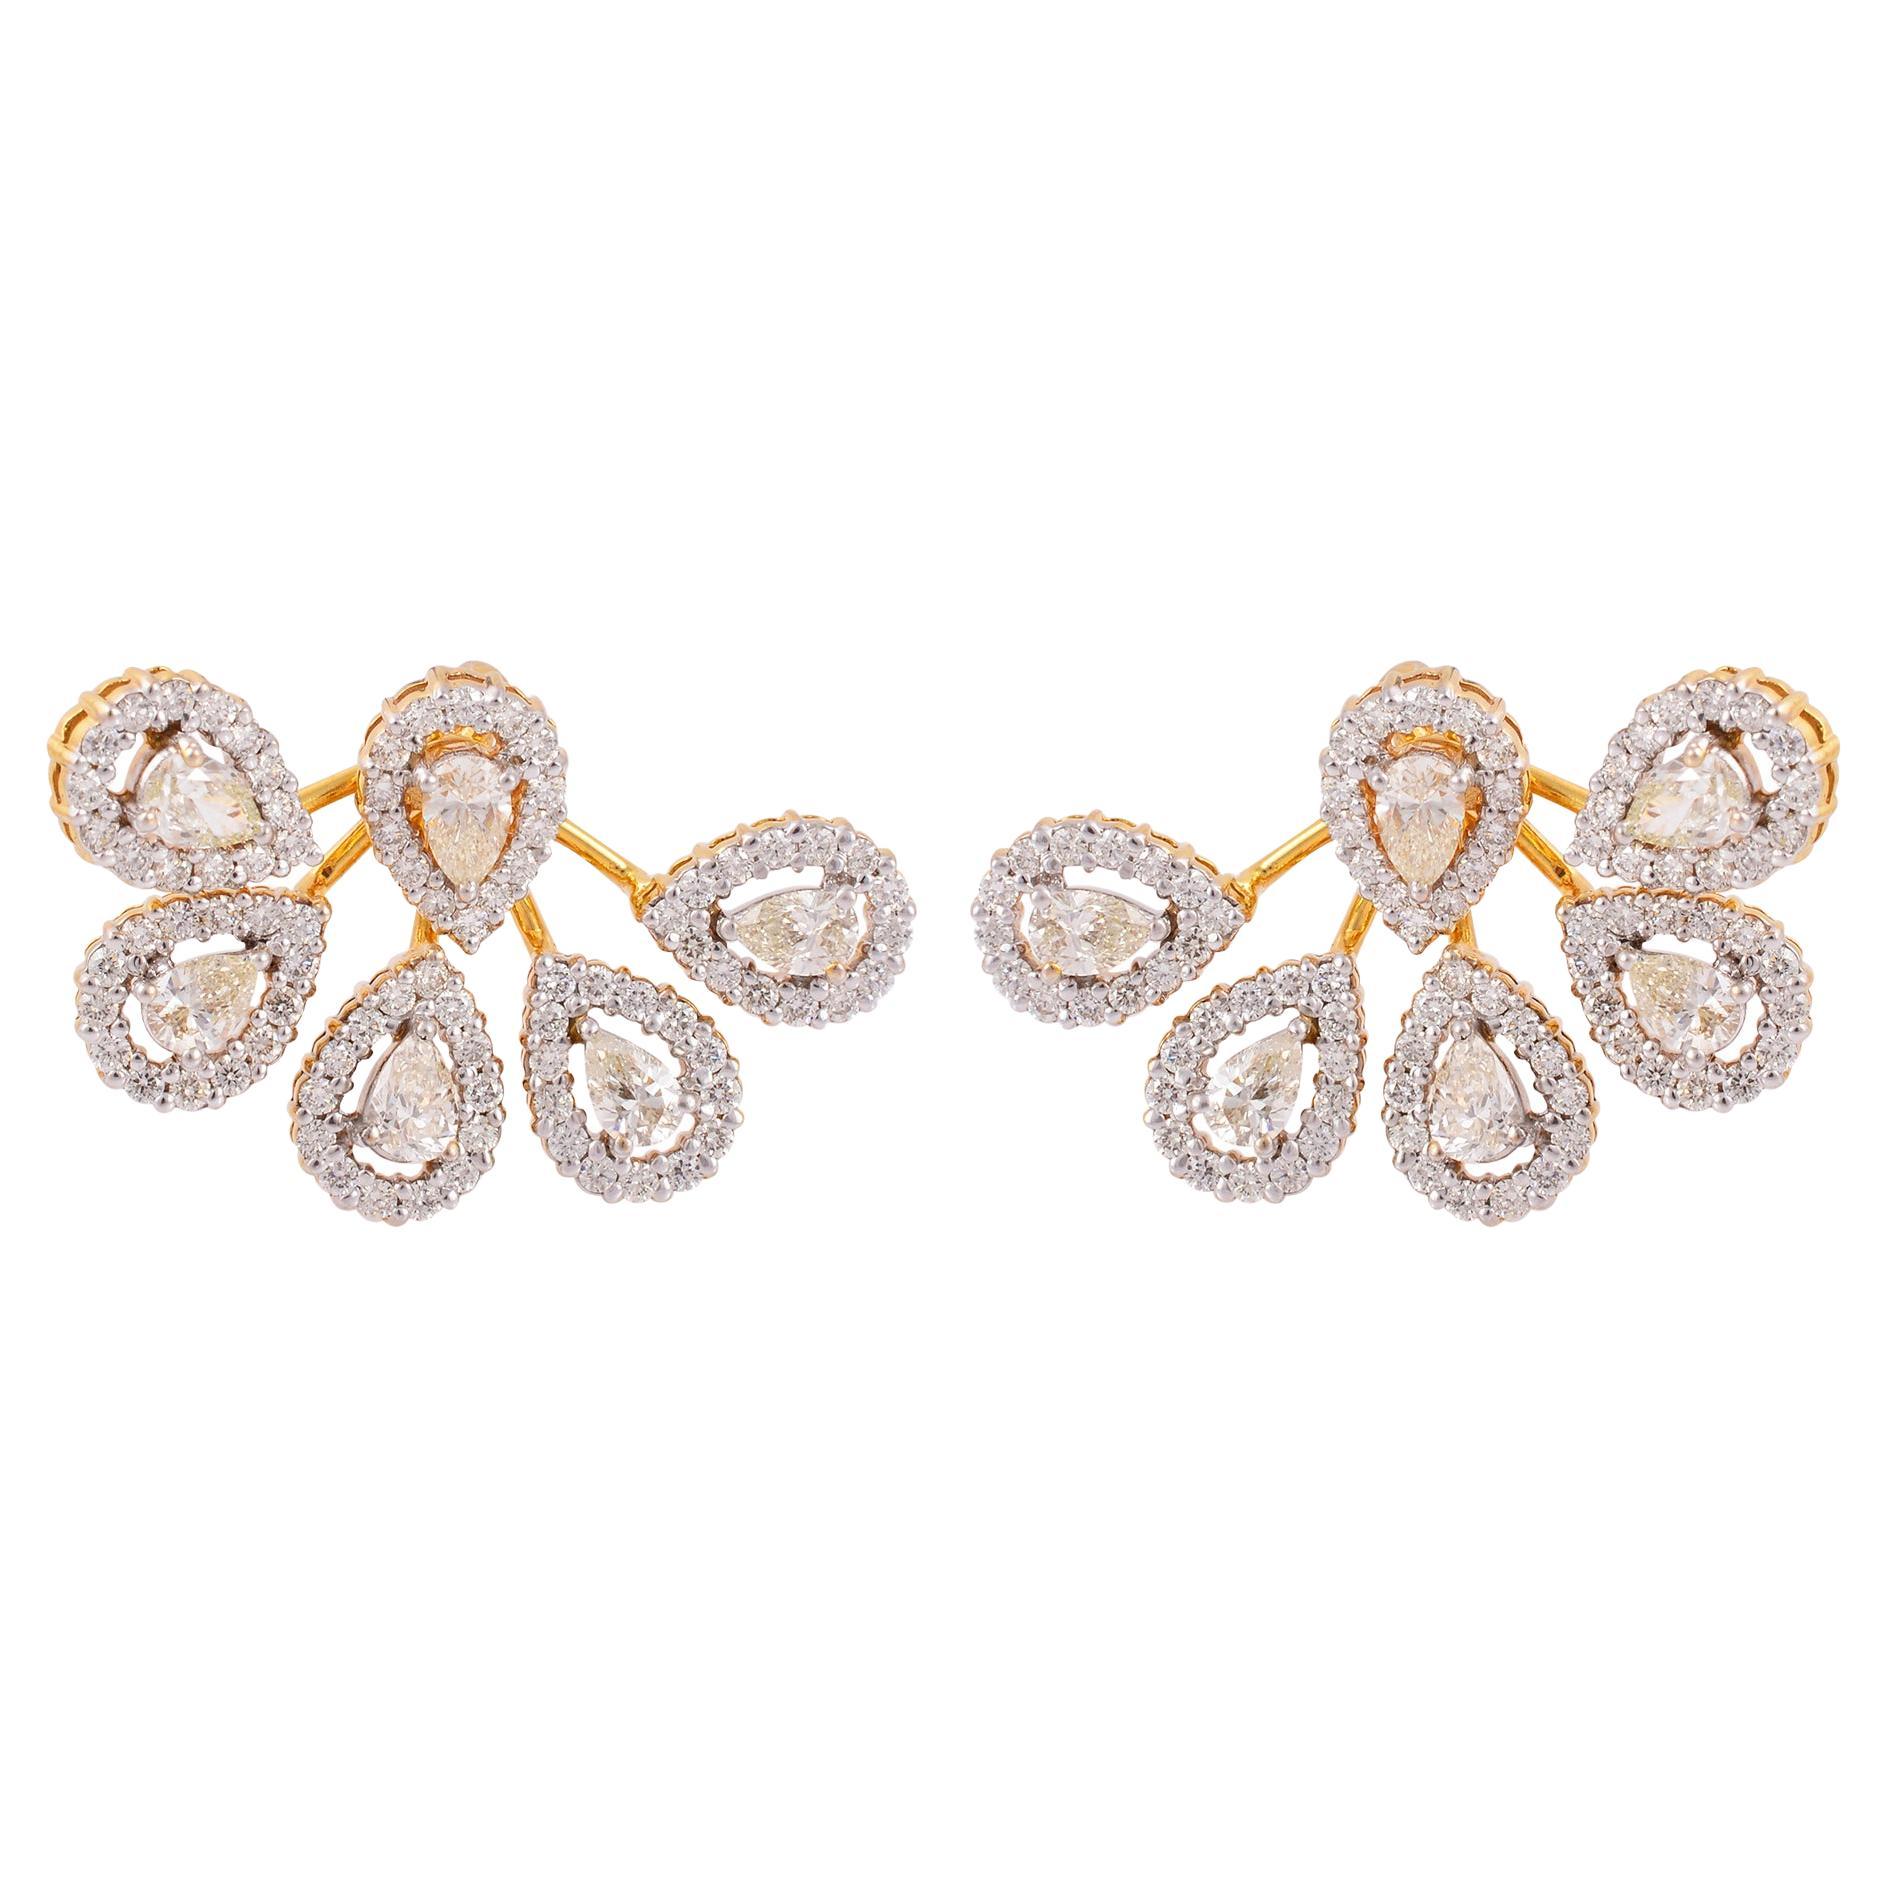 Natural 4.50 Carat Pear & Round Diamond Earrings 18 Karat Yellow Gold Jewelry